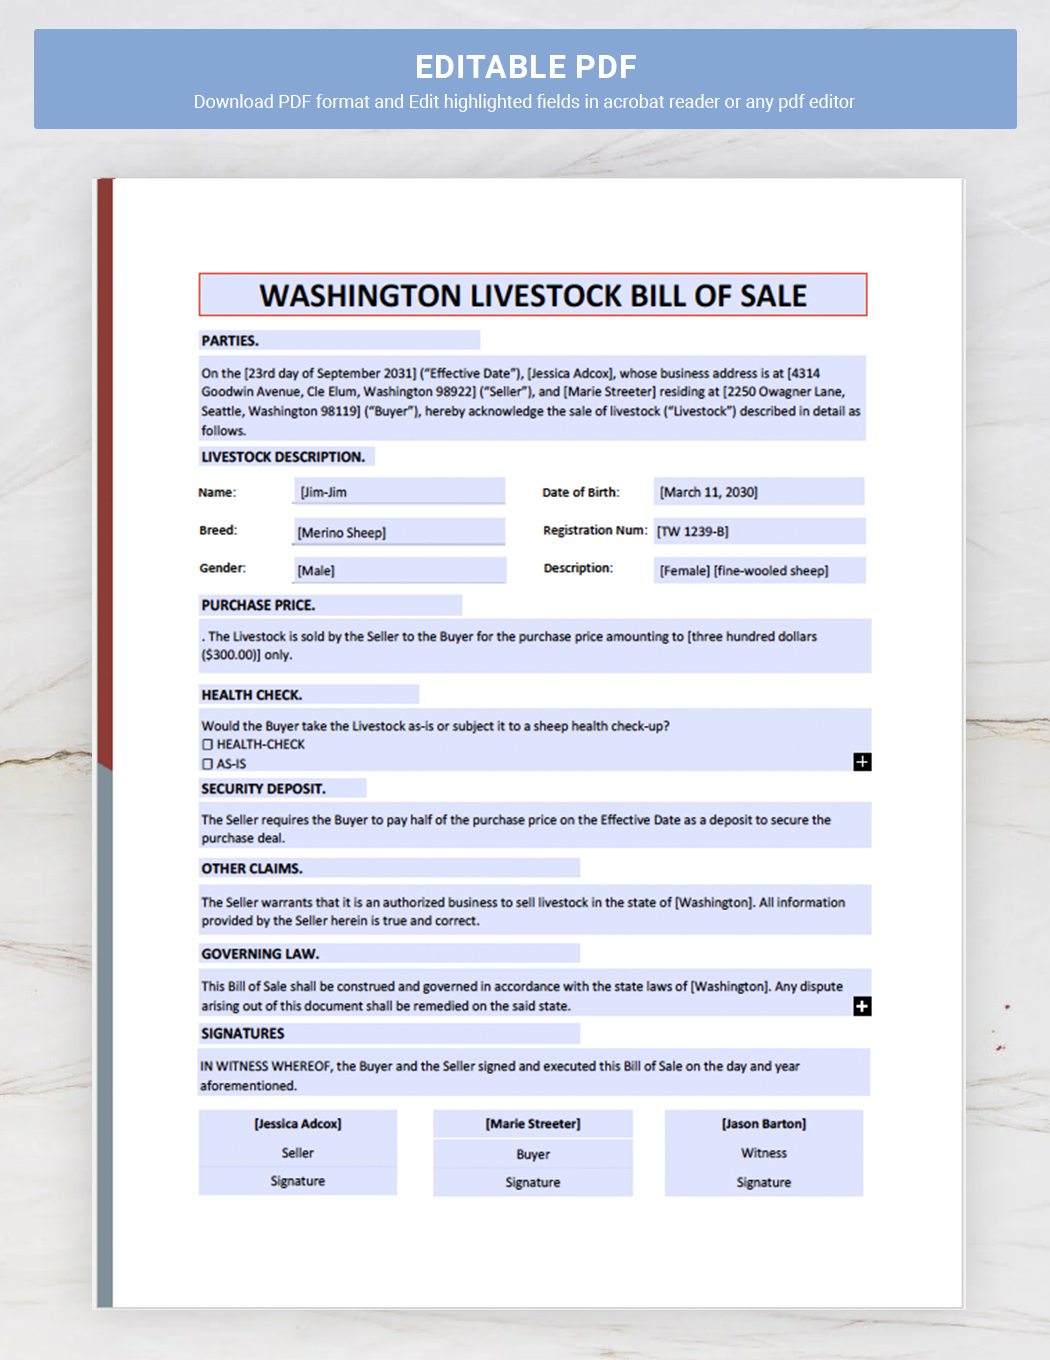 Washington Livestock Bill of Sale Form Template